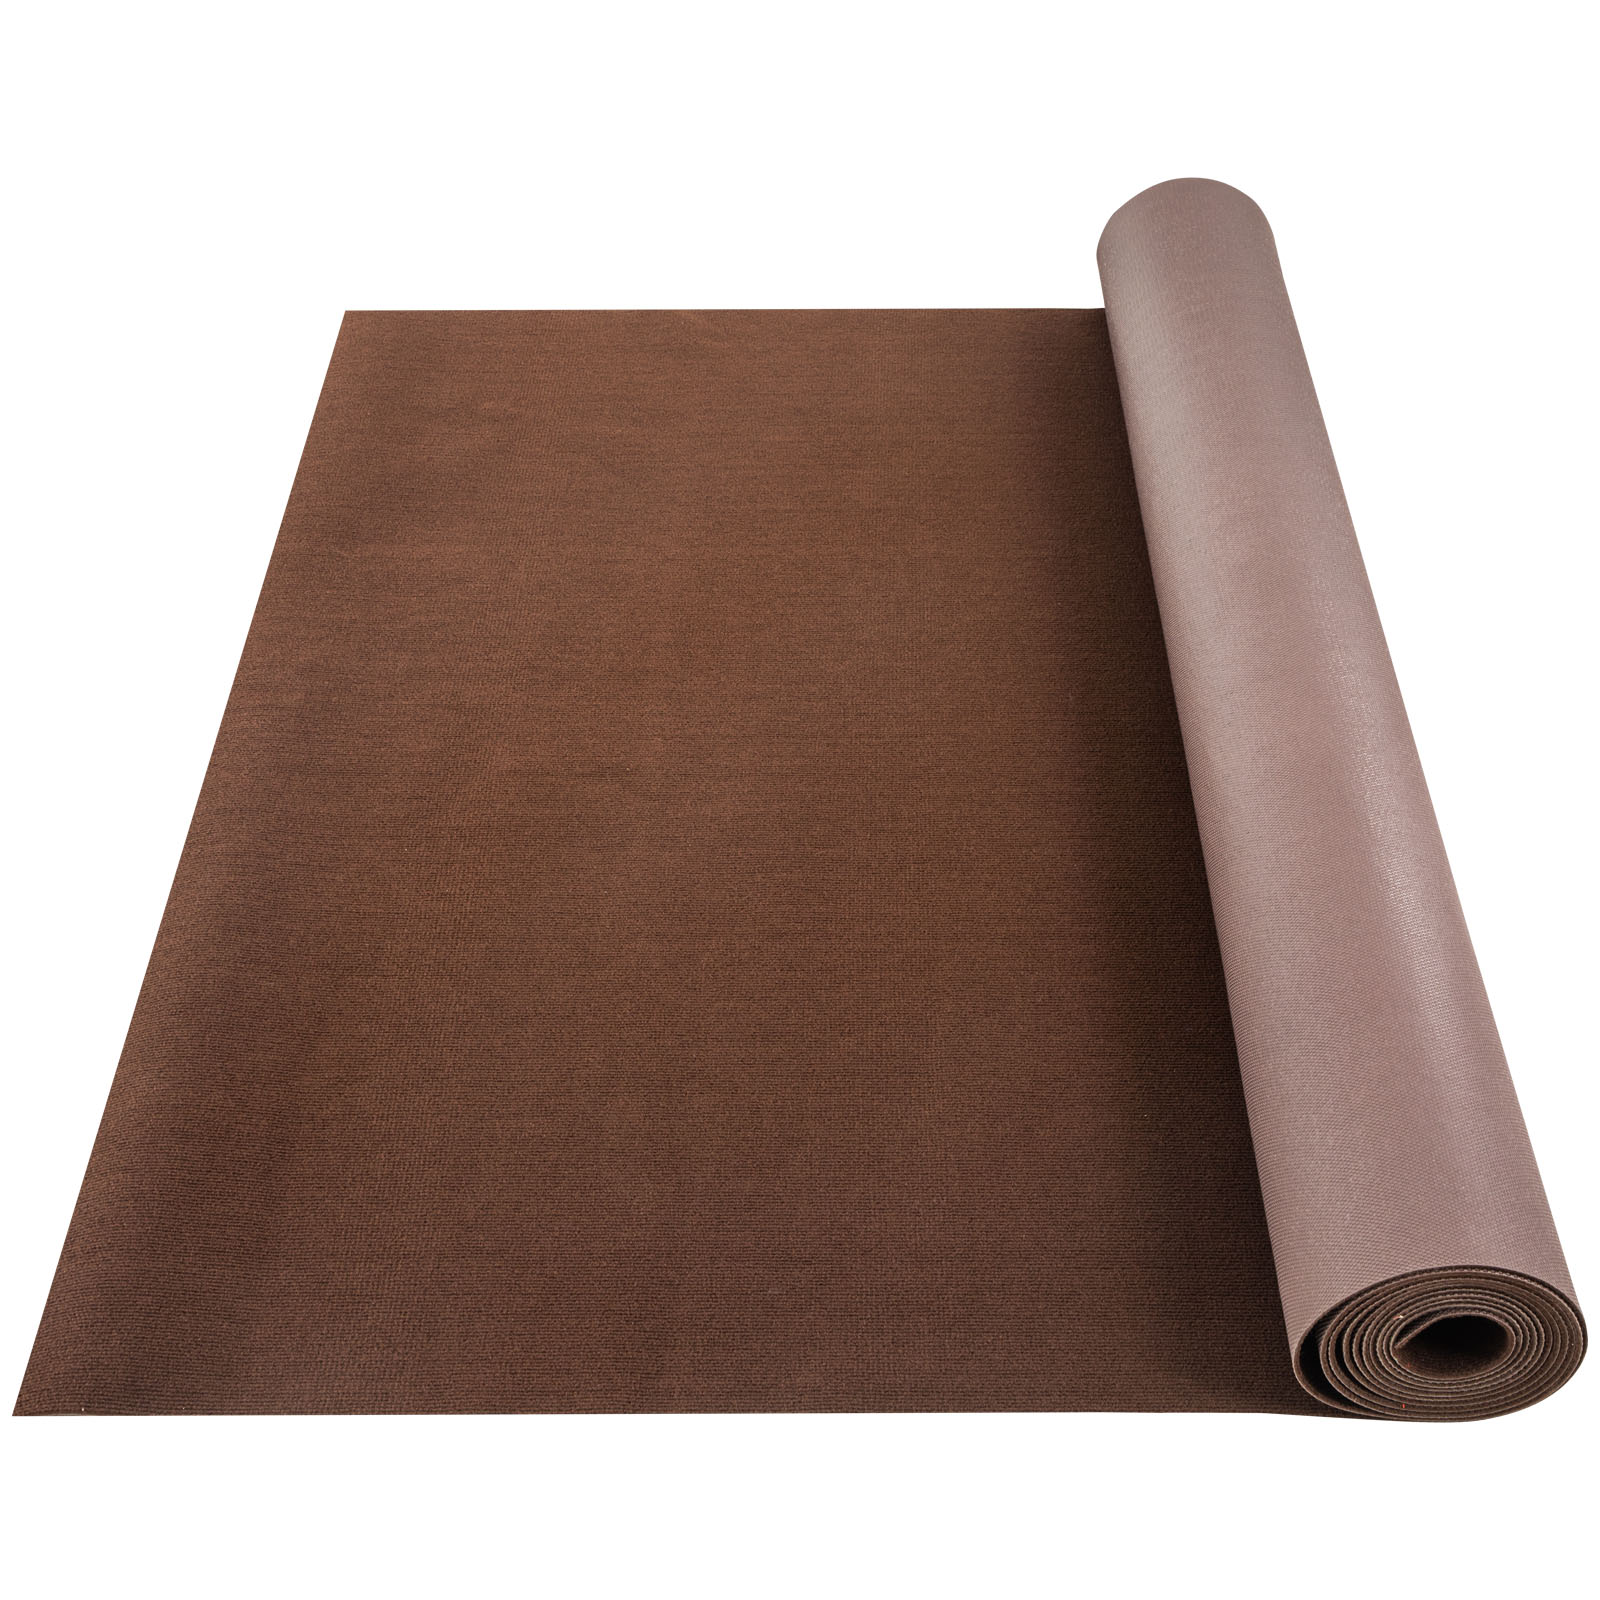 Vevor Bass Boat Carpet Cutpile Marine Carpet 6 X 18 Ft Deep Brown For Patio Deck от Vevor Many GEOs